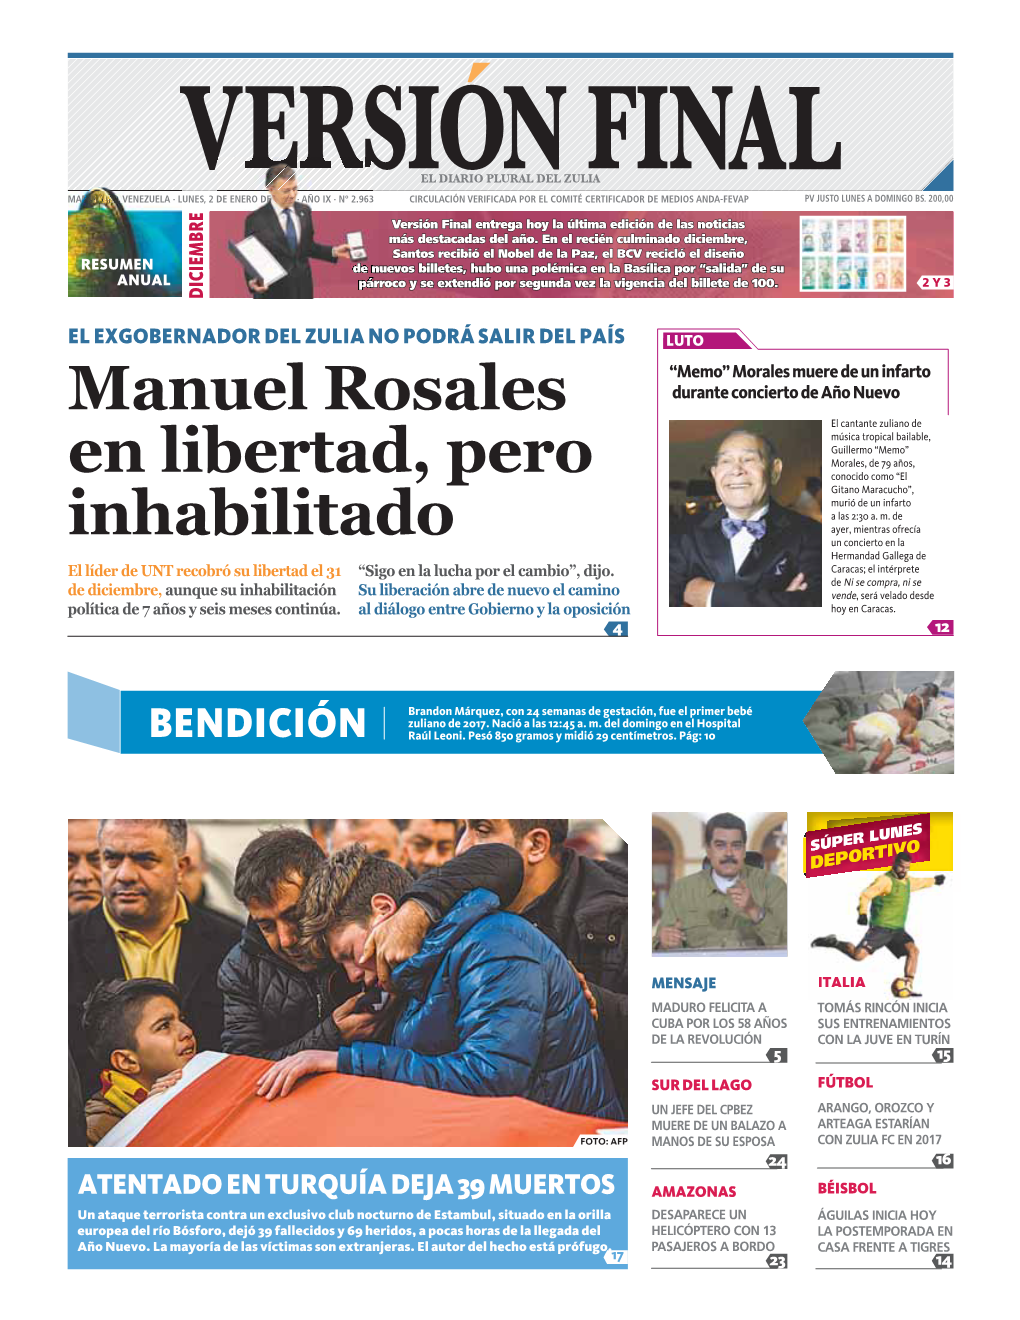 Manuel Rosales En Libertad, Pero Inhabilitado